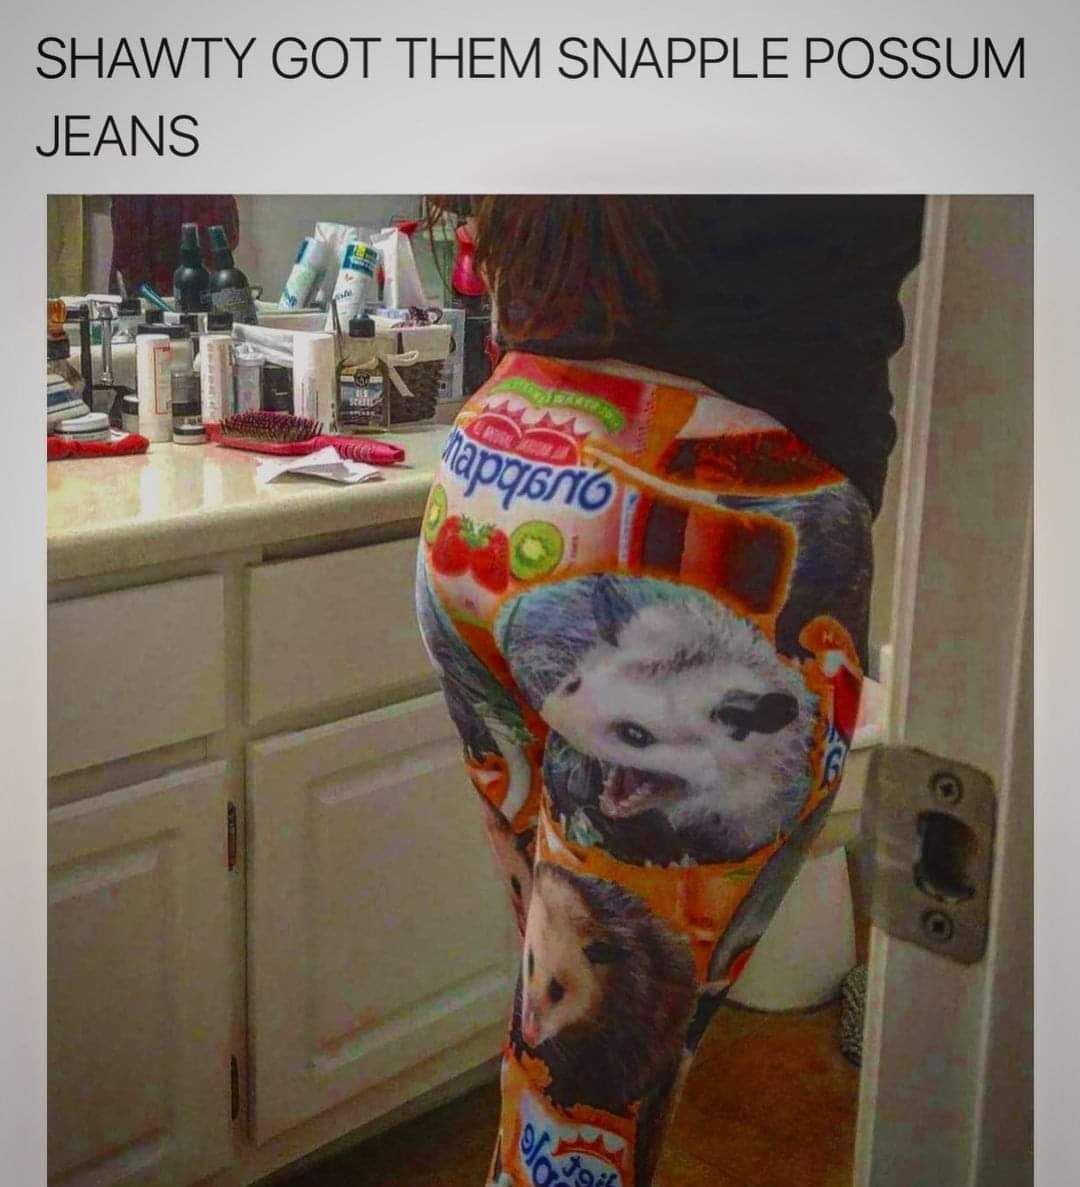 Just need possum fur boots